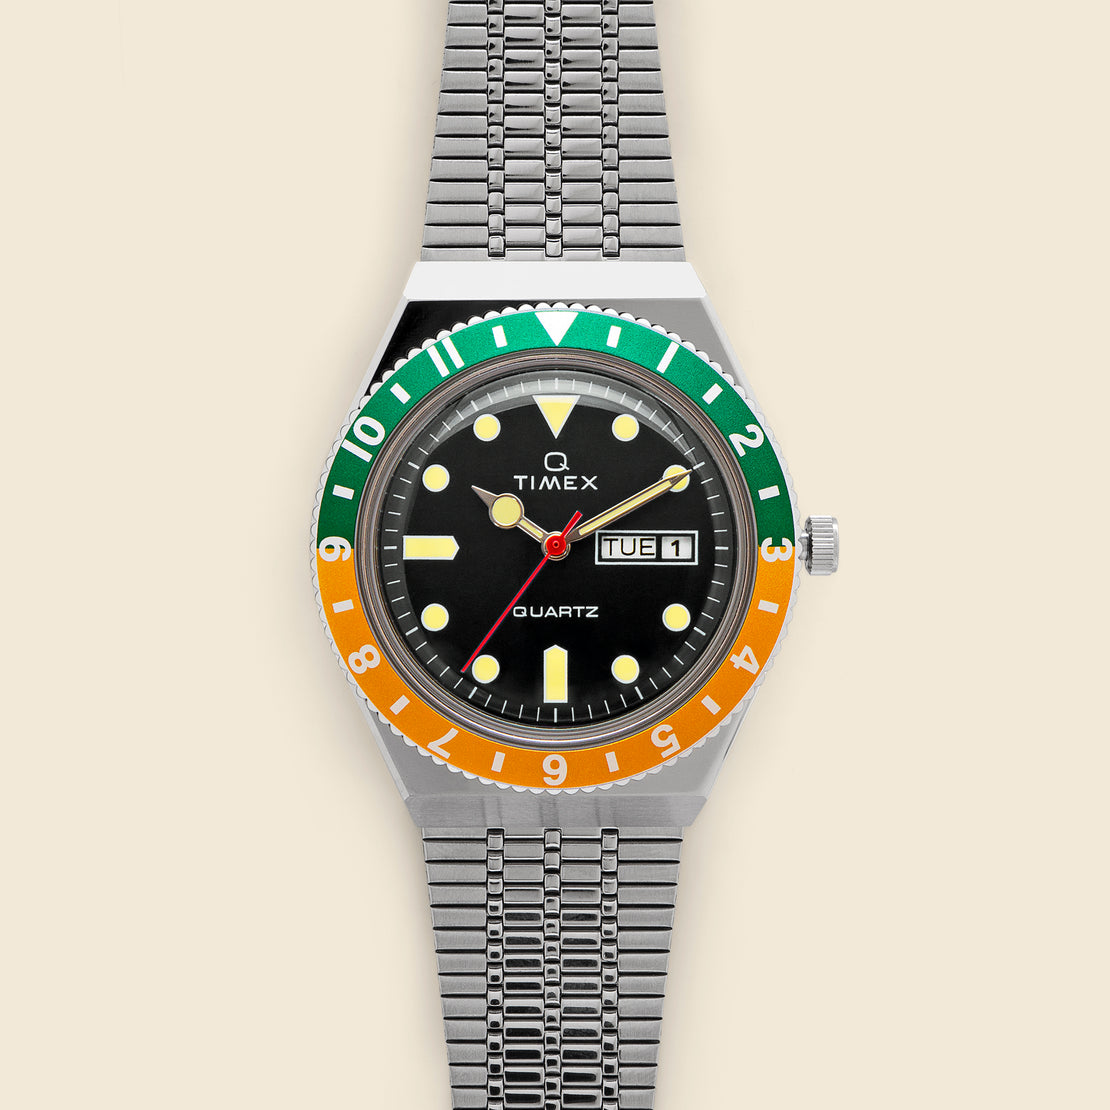 Timex Q Timex Reissue 38mm Bracelet Watch - Stainless Steel/Black/Green/Yellow